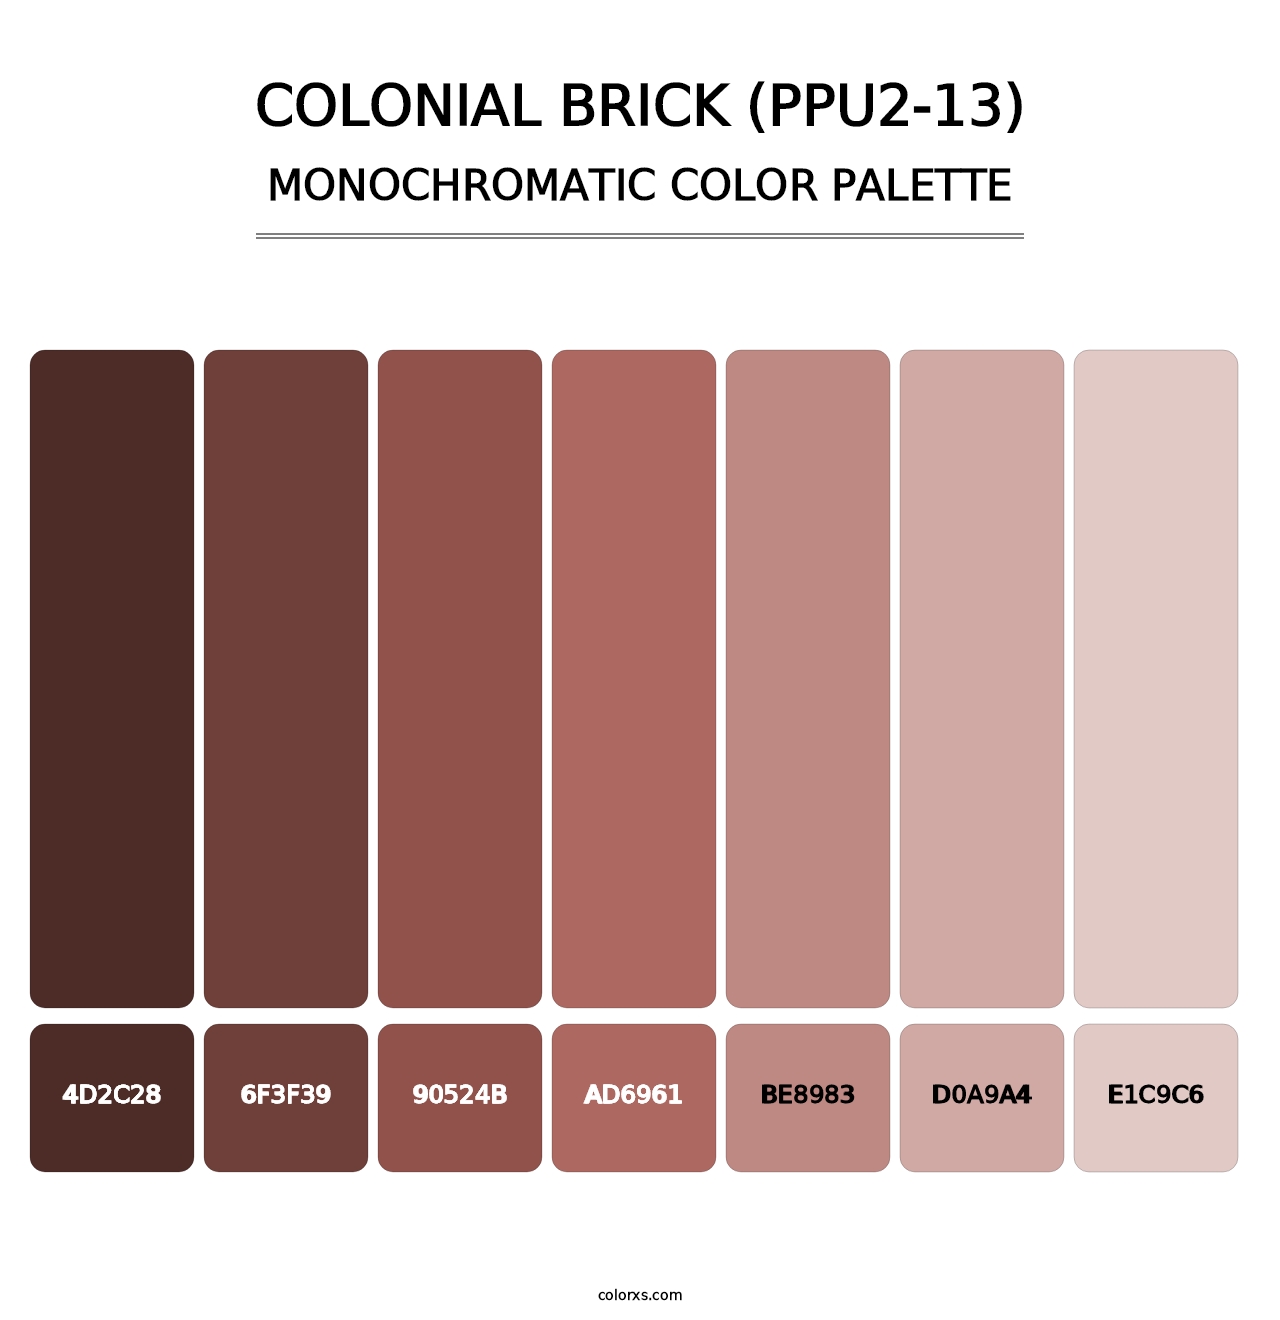 Colonial Brick (PPU2-13) - Monochromatic Color Palette